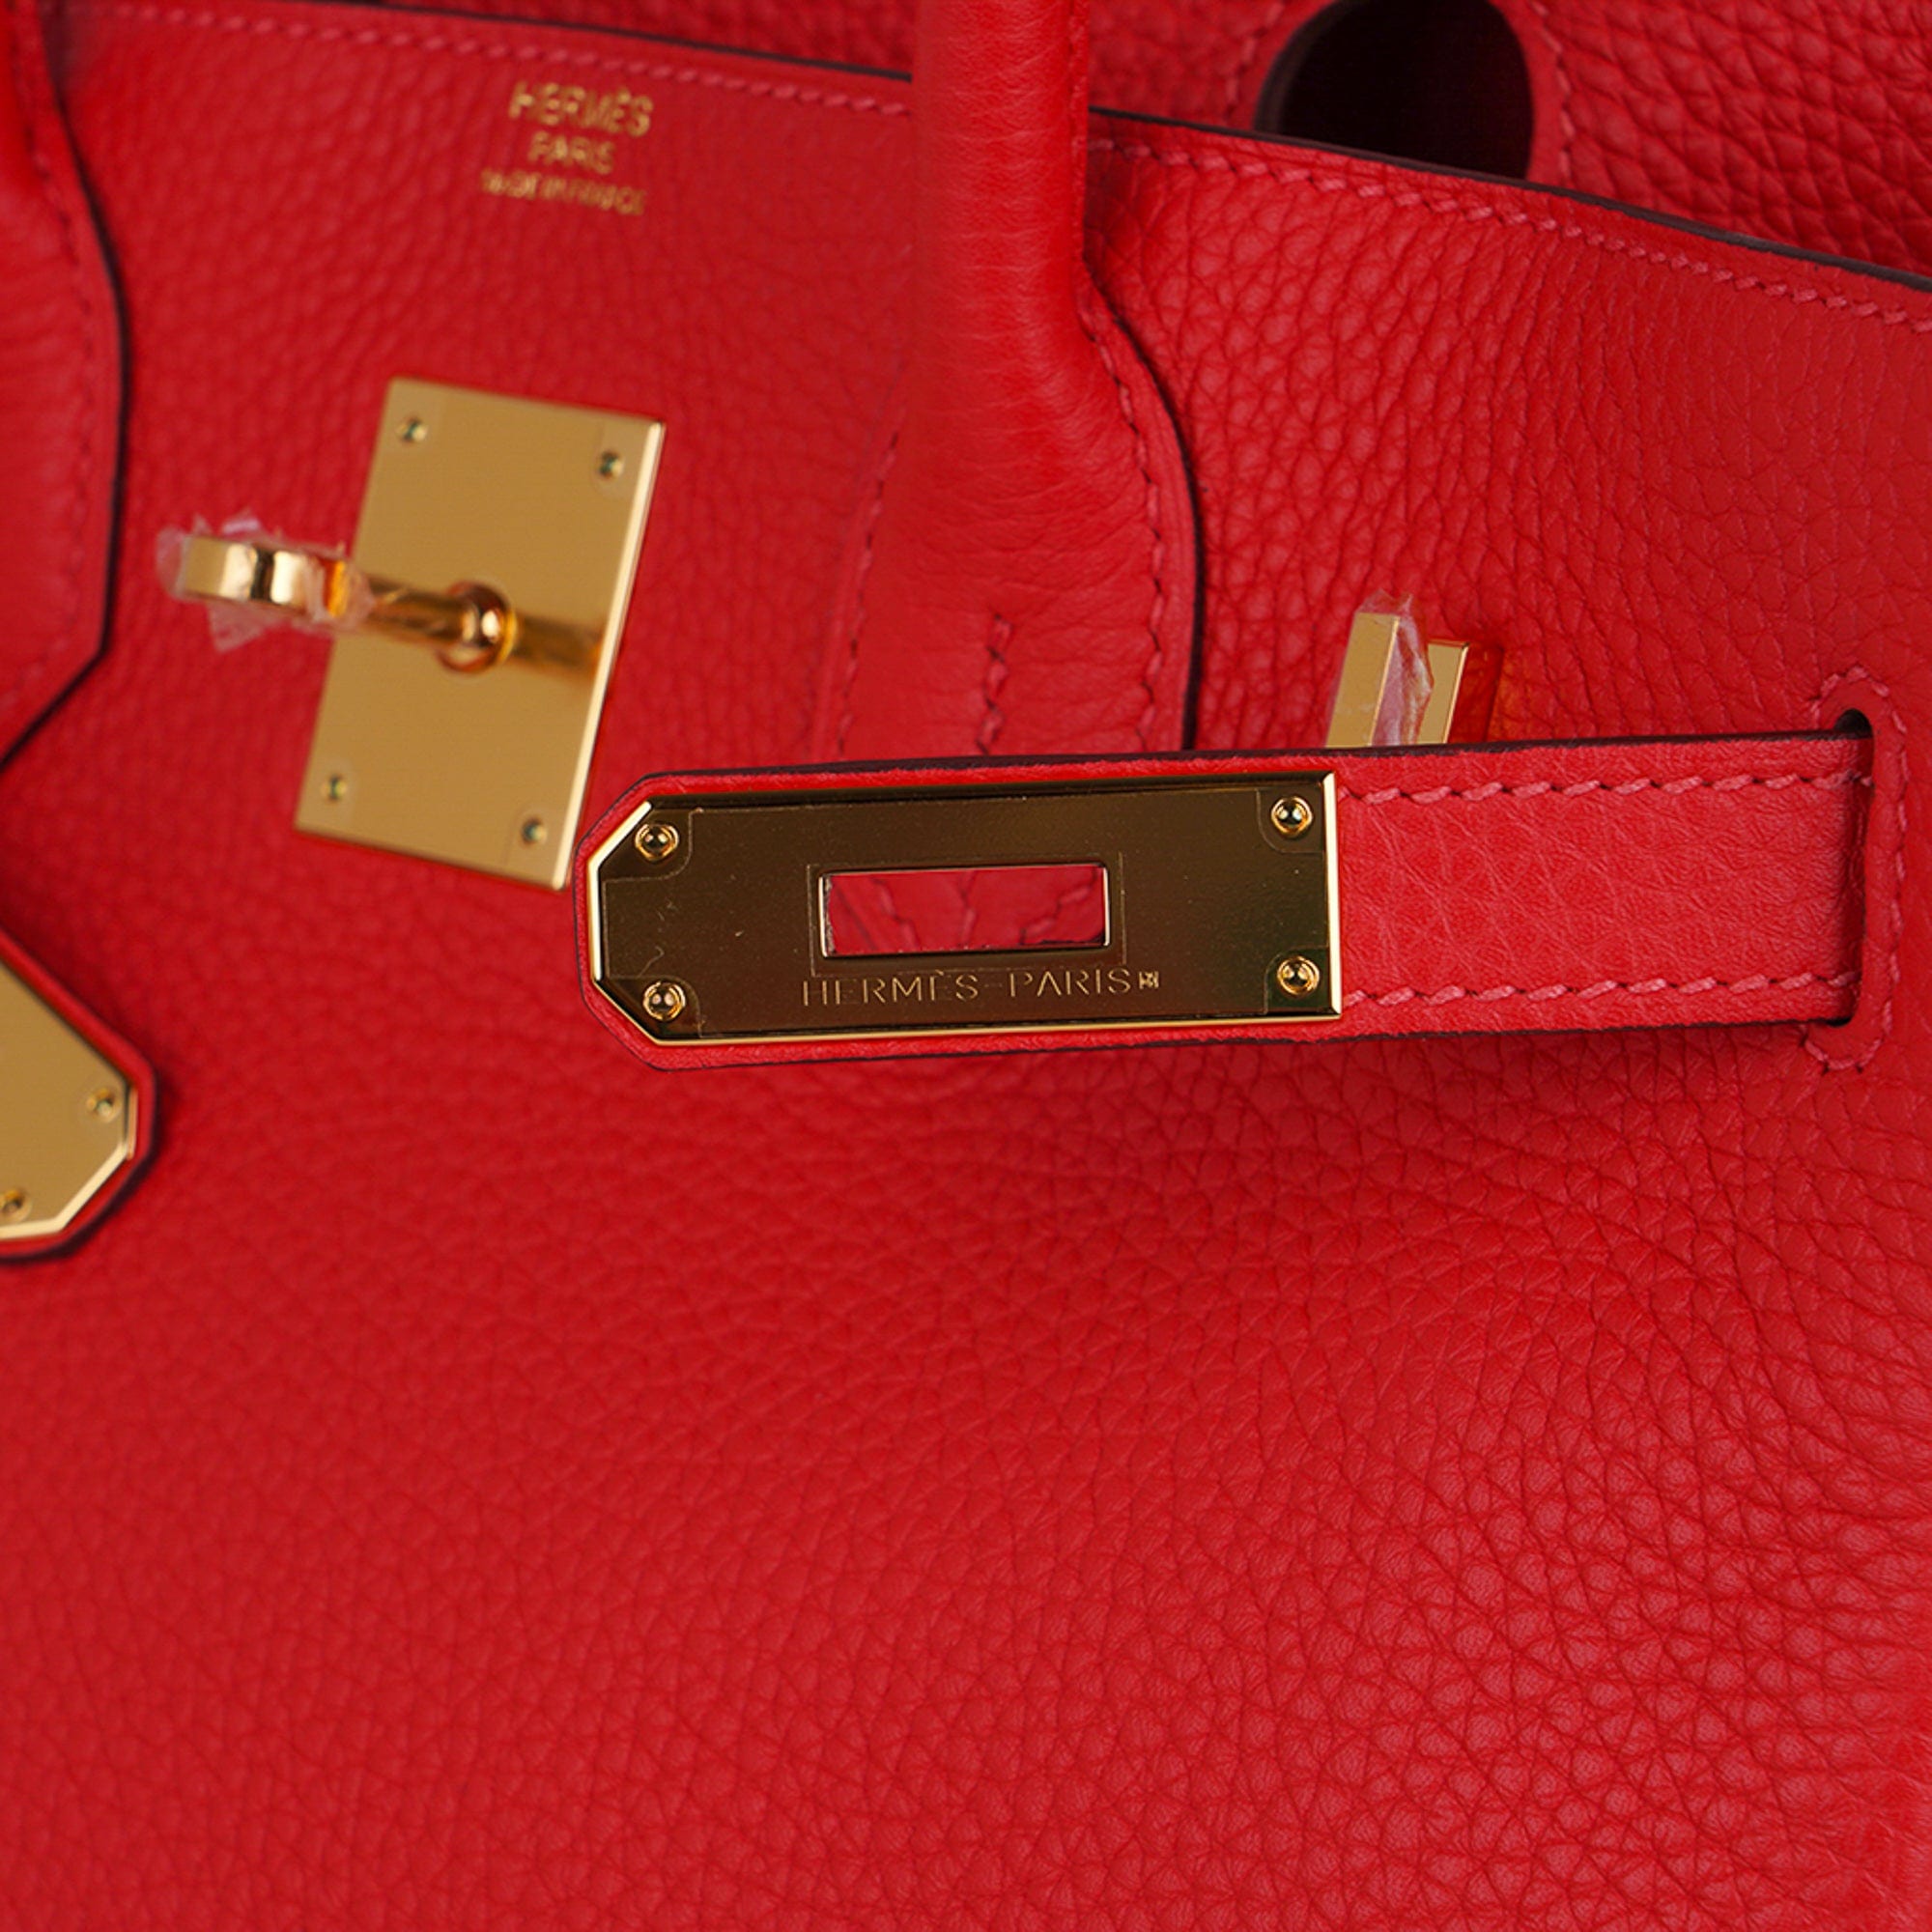 Hermes Birkin 35 Capucine Bag Gold Hardware Togo Leather – Mightychic